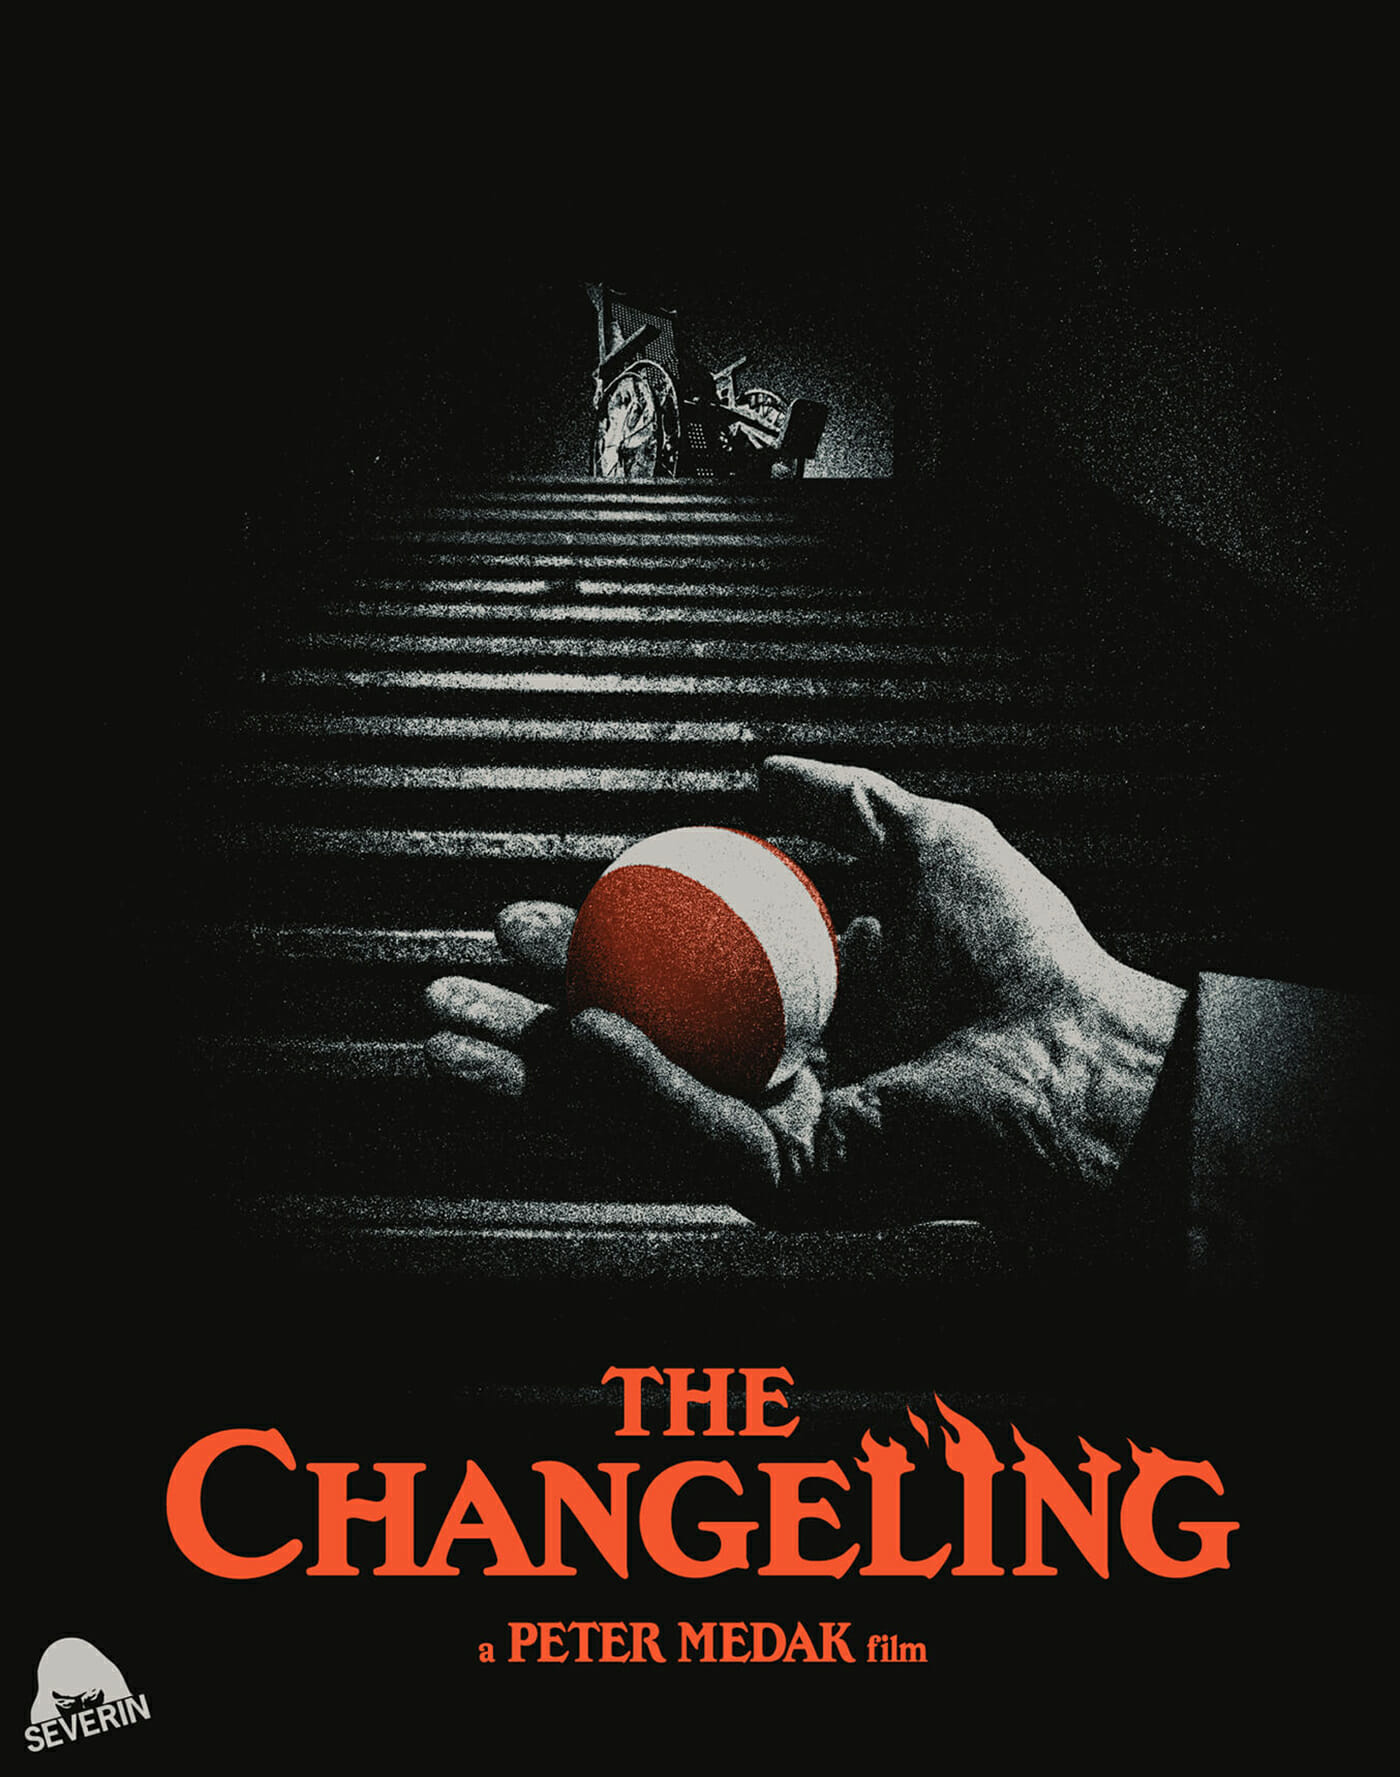 Changeling (Severin) (3 disc LE Slipcover CD / Blu-Ray / 4k UHD All Region)